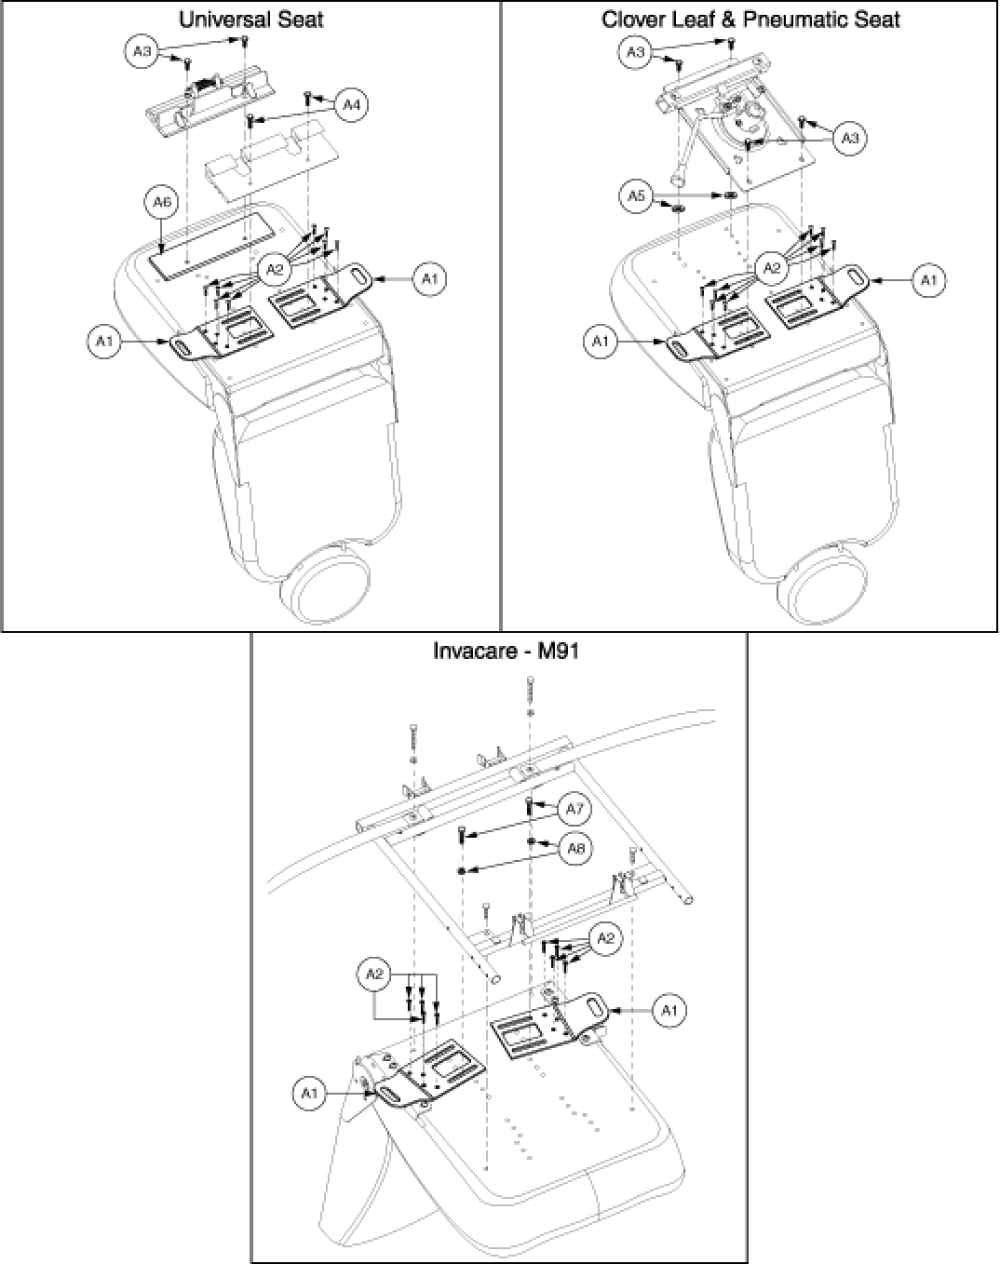 Silver Star Lift - Chair Restraint Tabs parts diagram